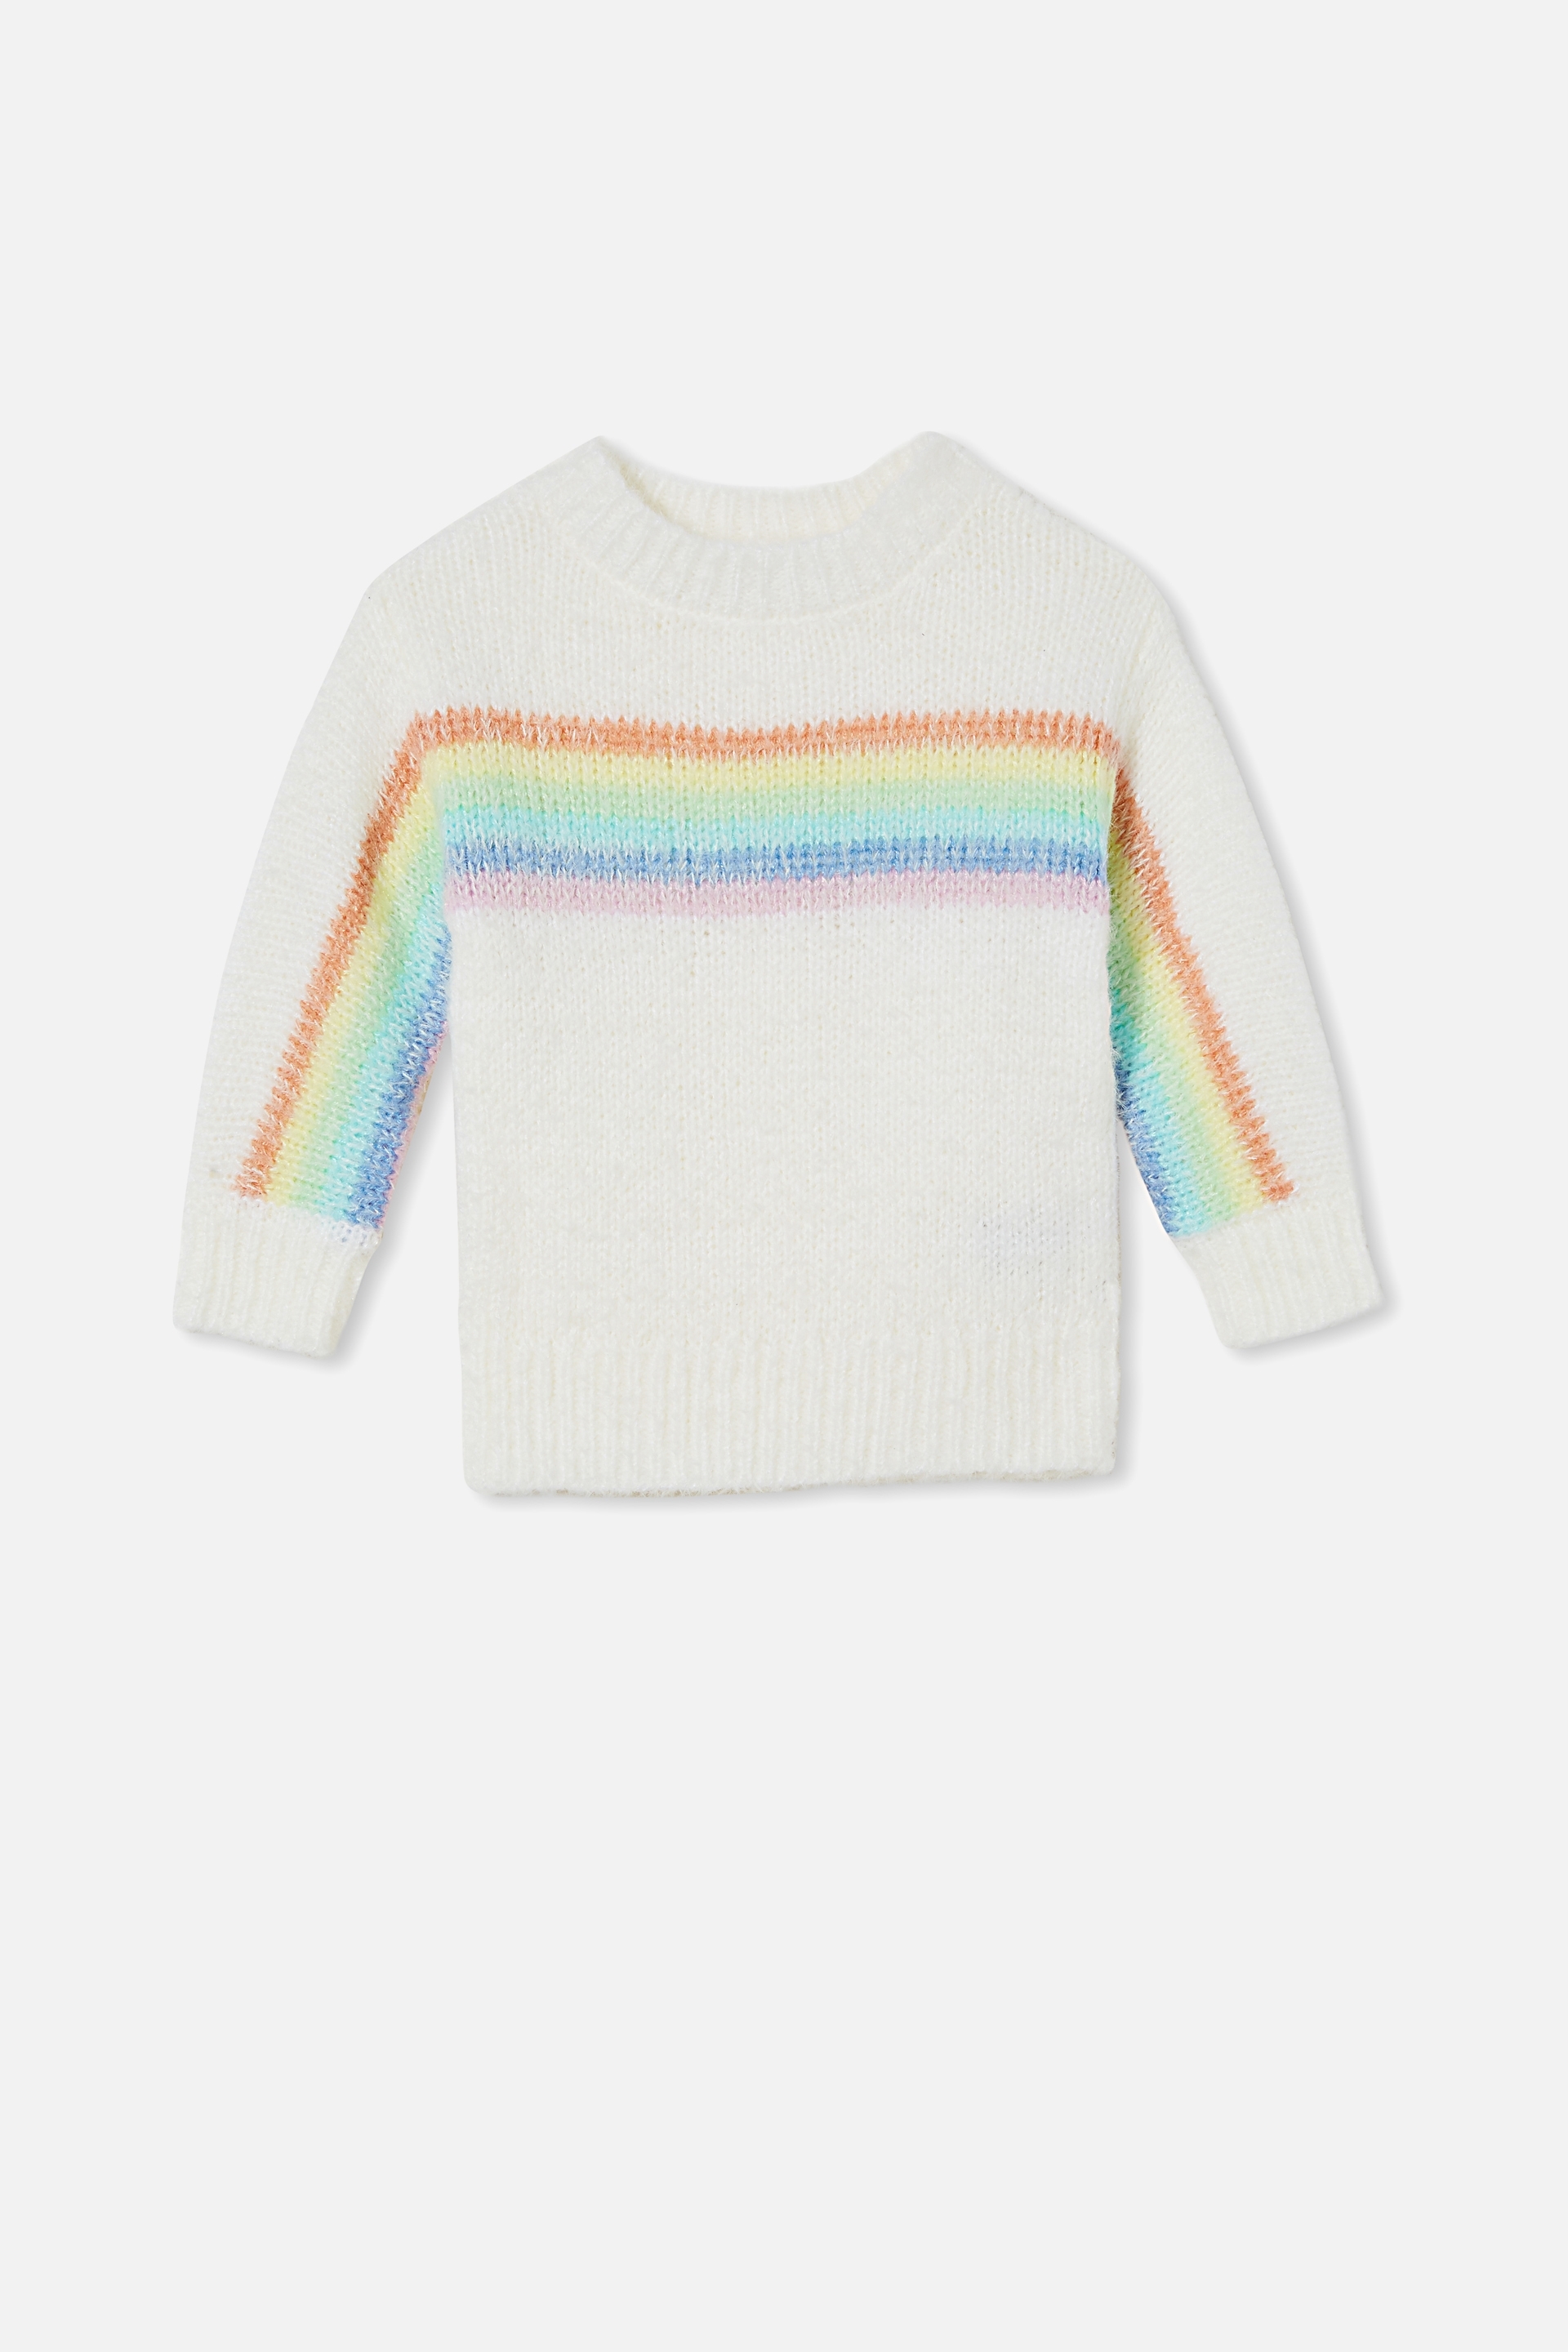 Cotton On Kids - Danica Knit Jumper - Cream/rainbow stripe